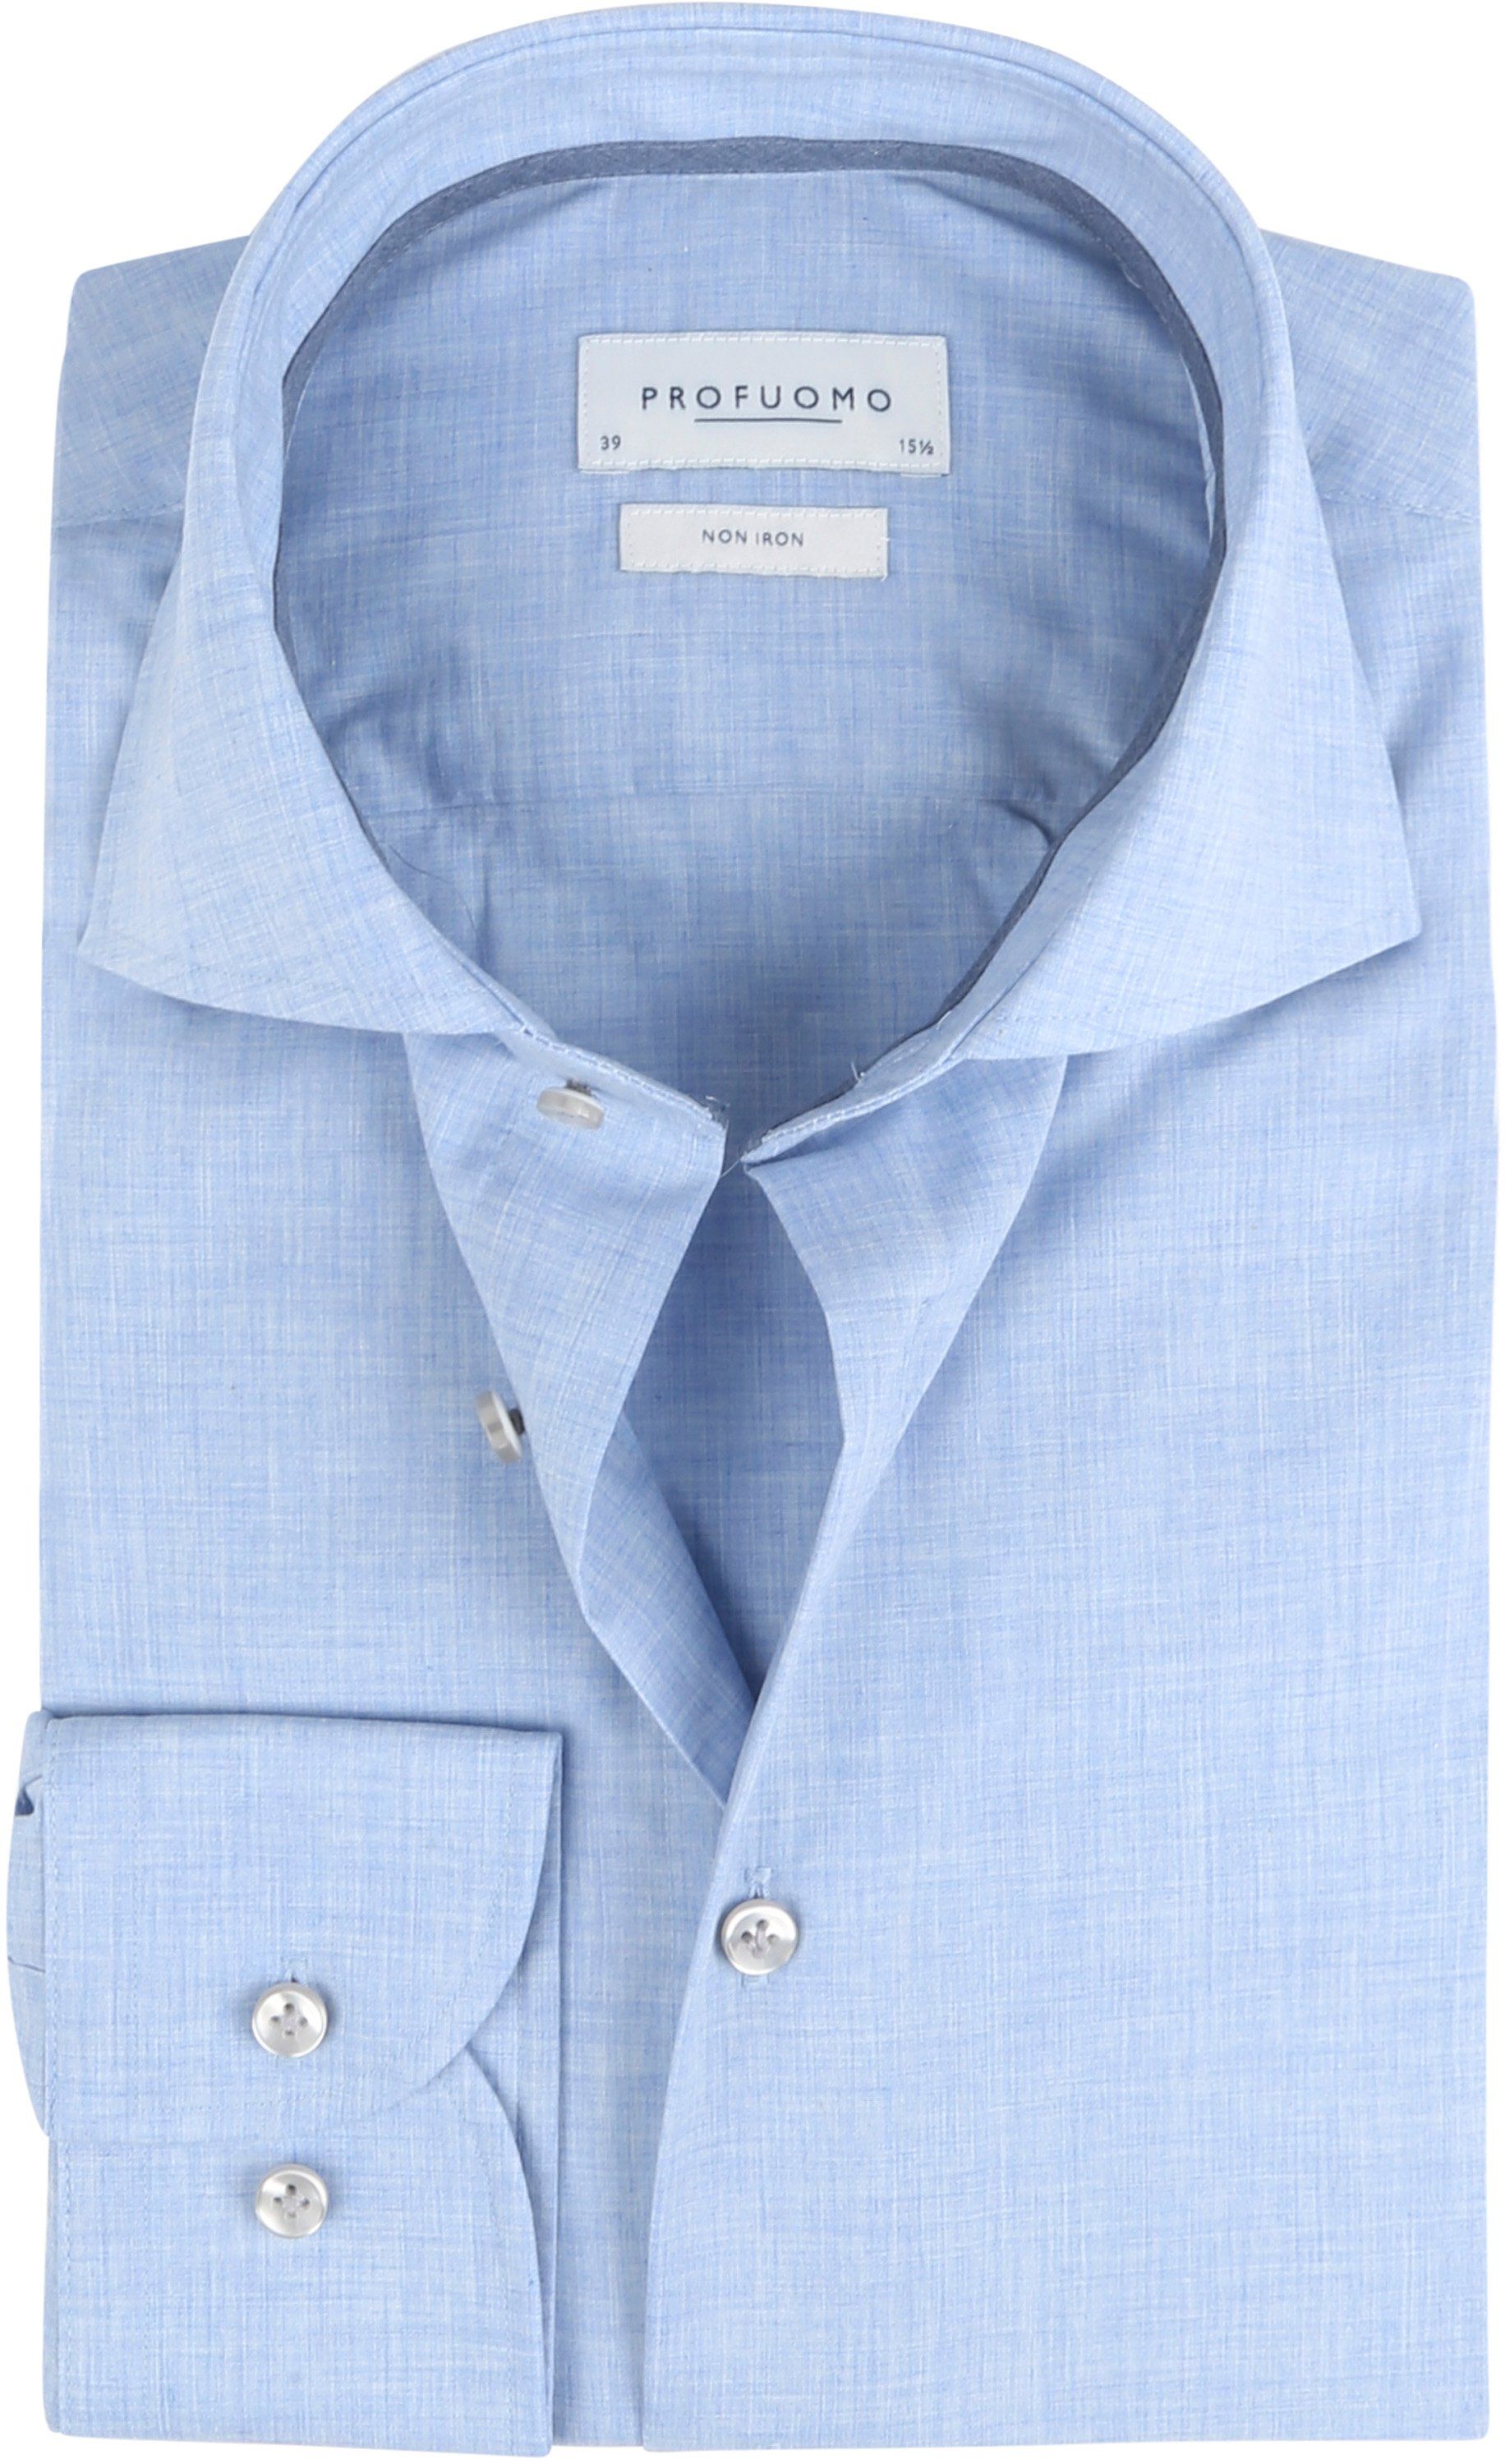 Profuomo Shirt Blue size 14.5